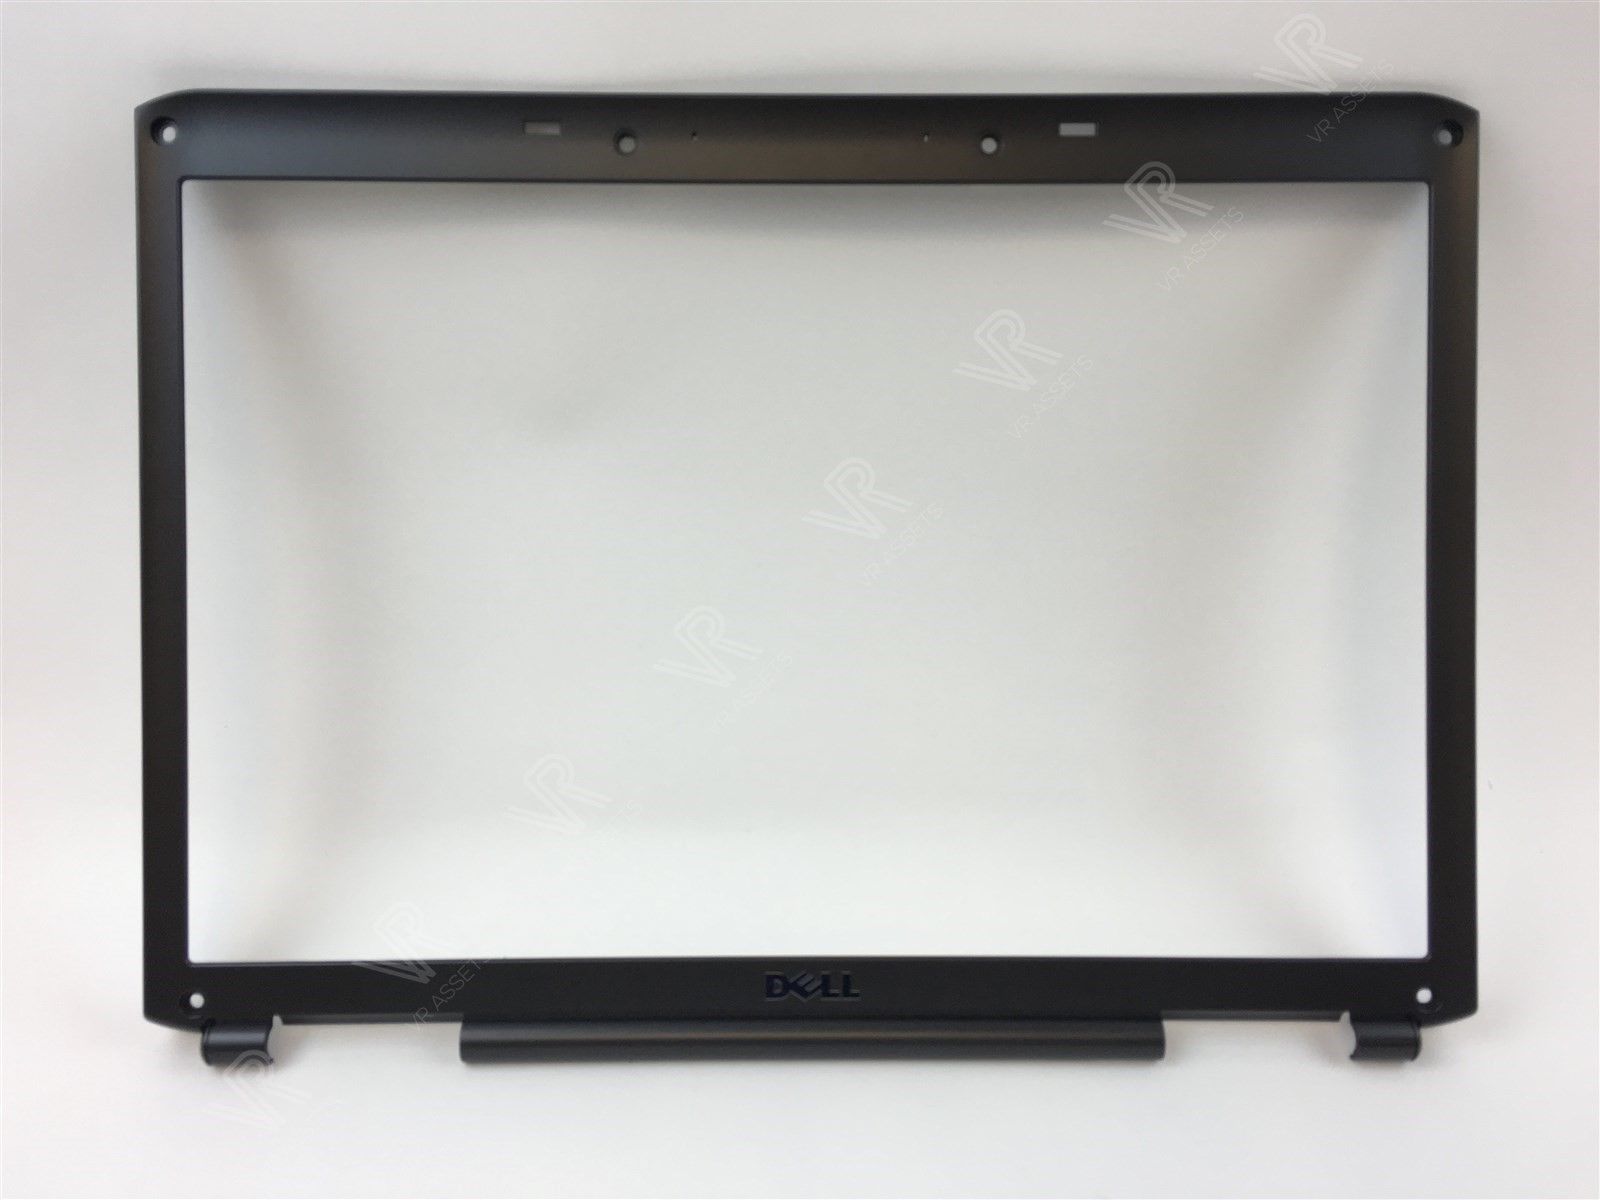 Geniune Dell Vostro 1700 17.1" Black Laptop LCD Front Bezel Cover DX494 0DX494